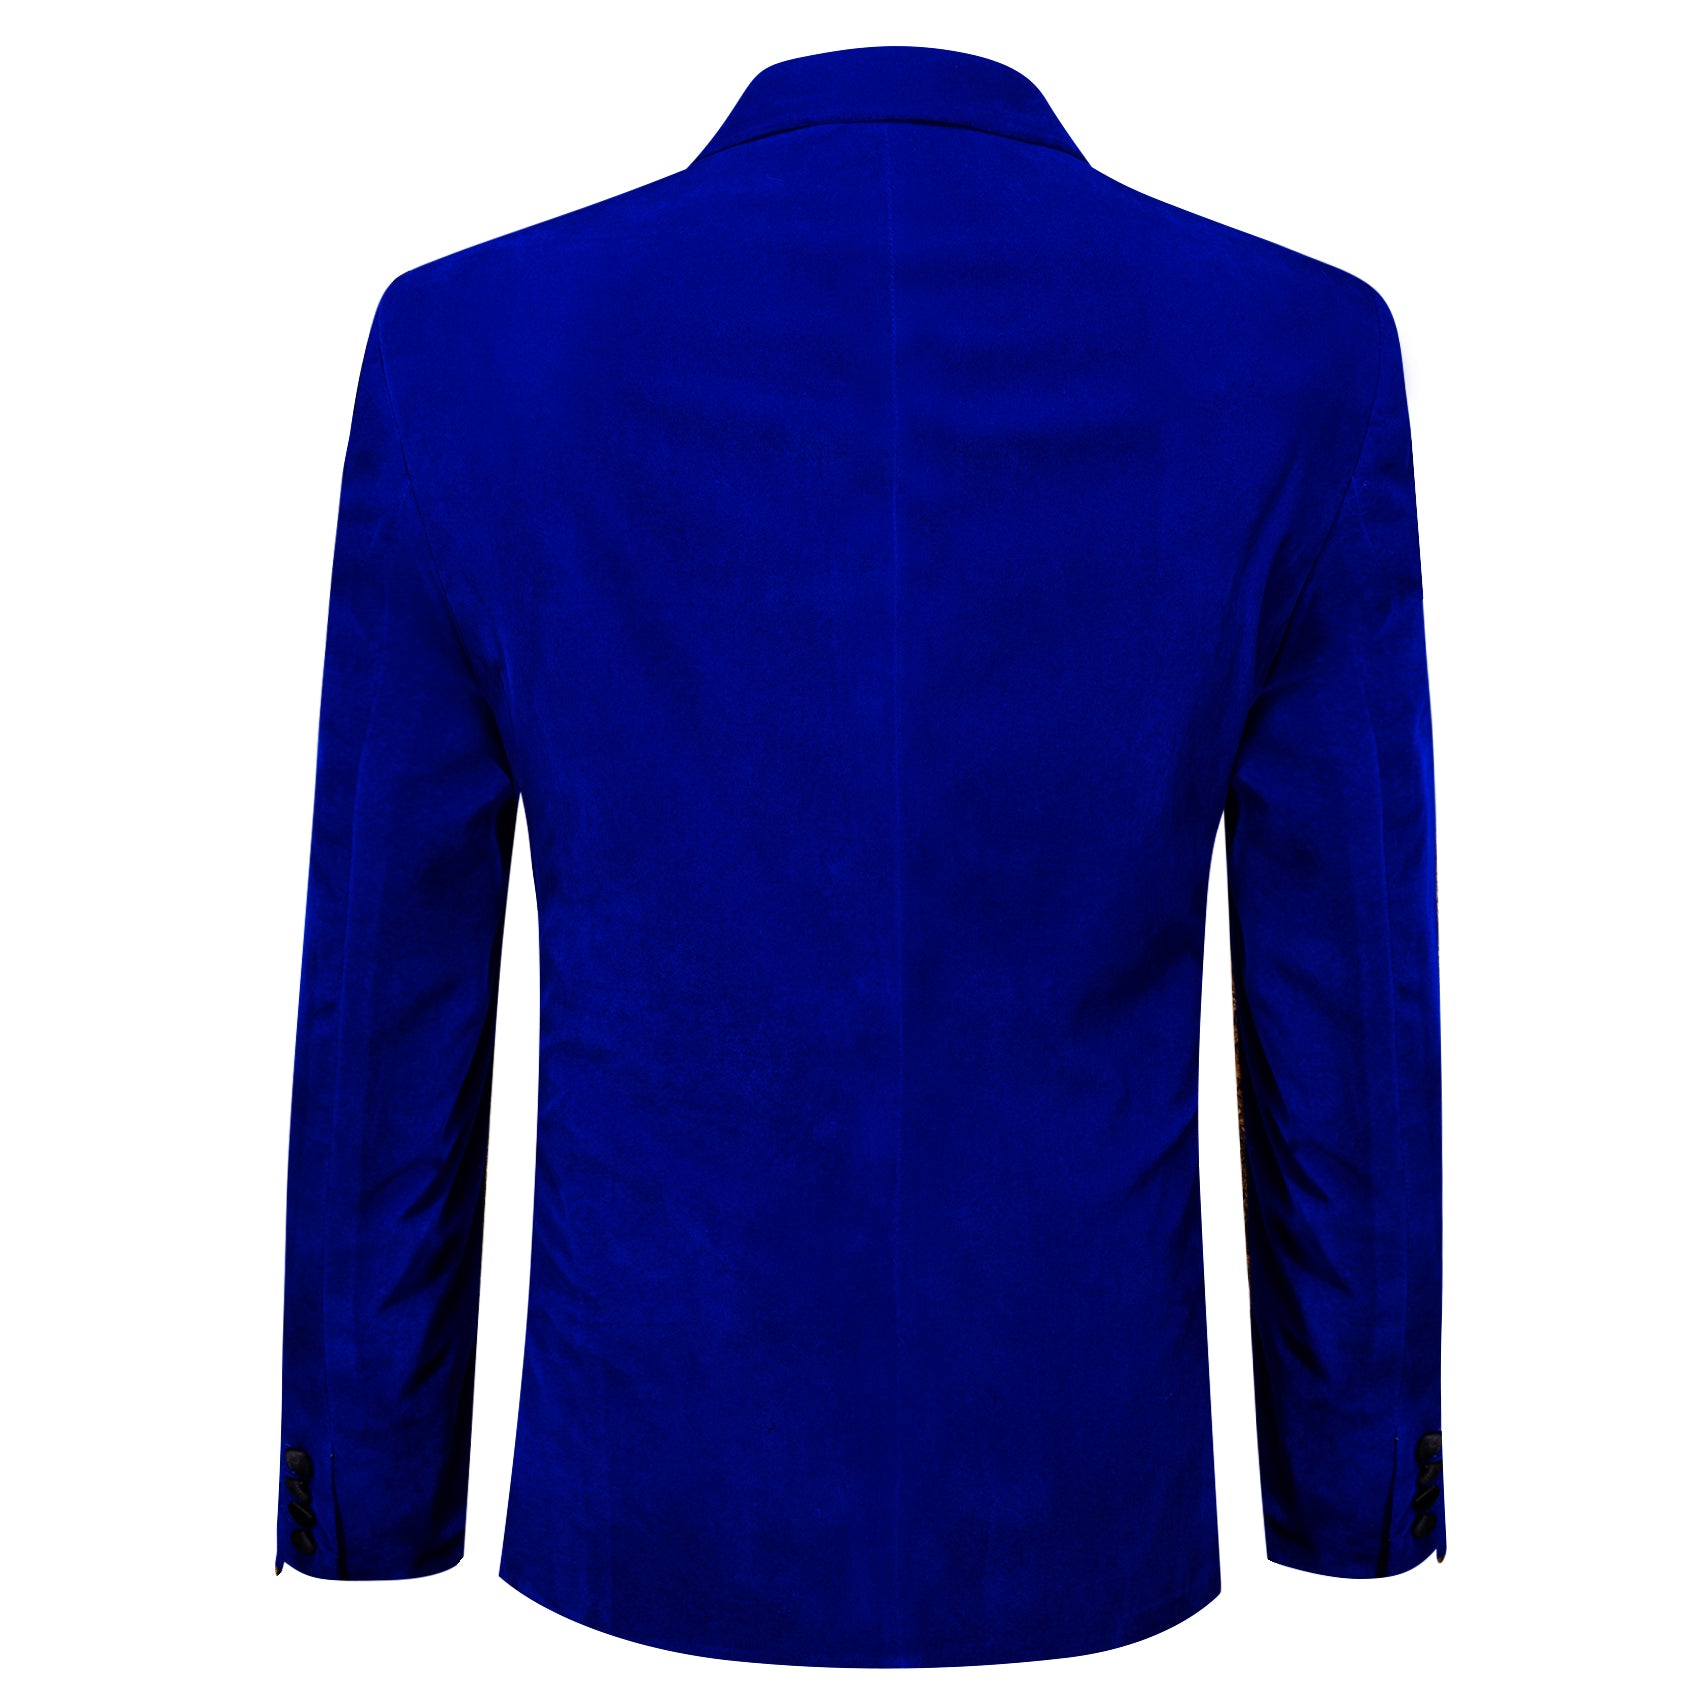 Barry.wang Men's Suit Navy Blue Solid Silk Peak Collar Suit for Party